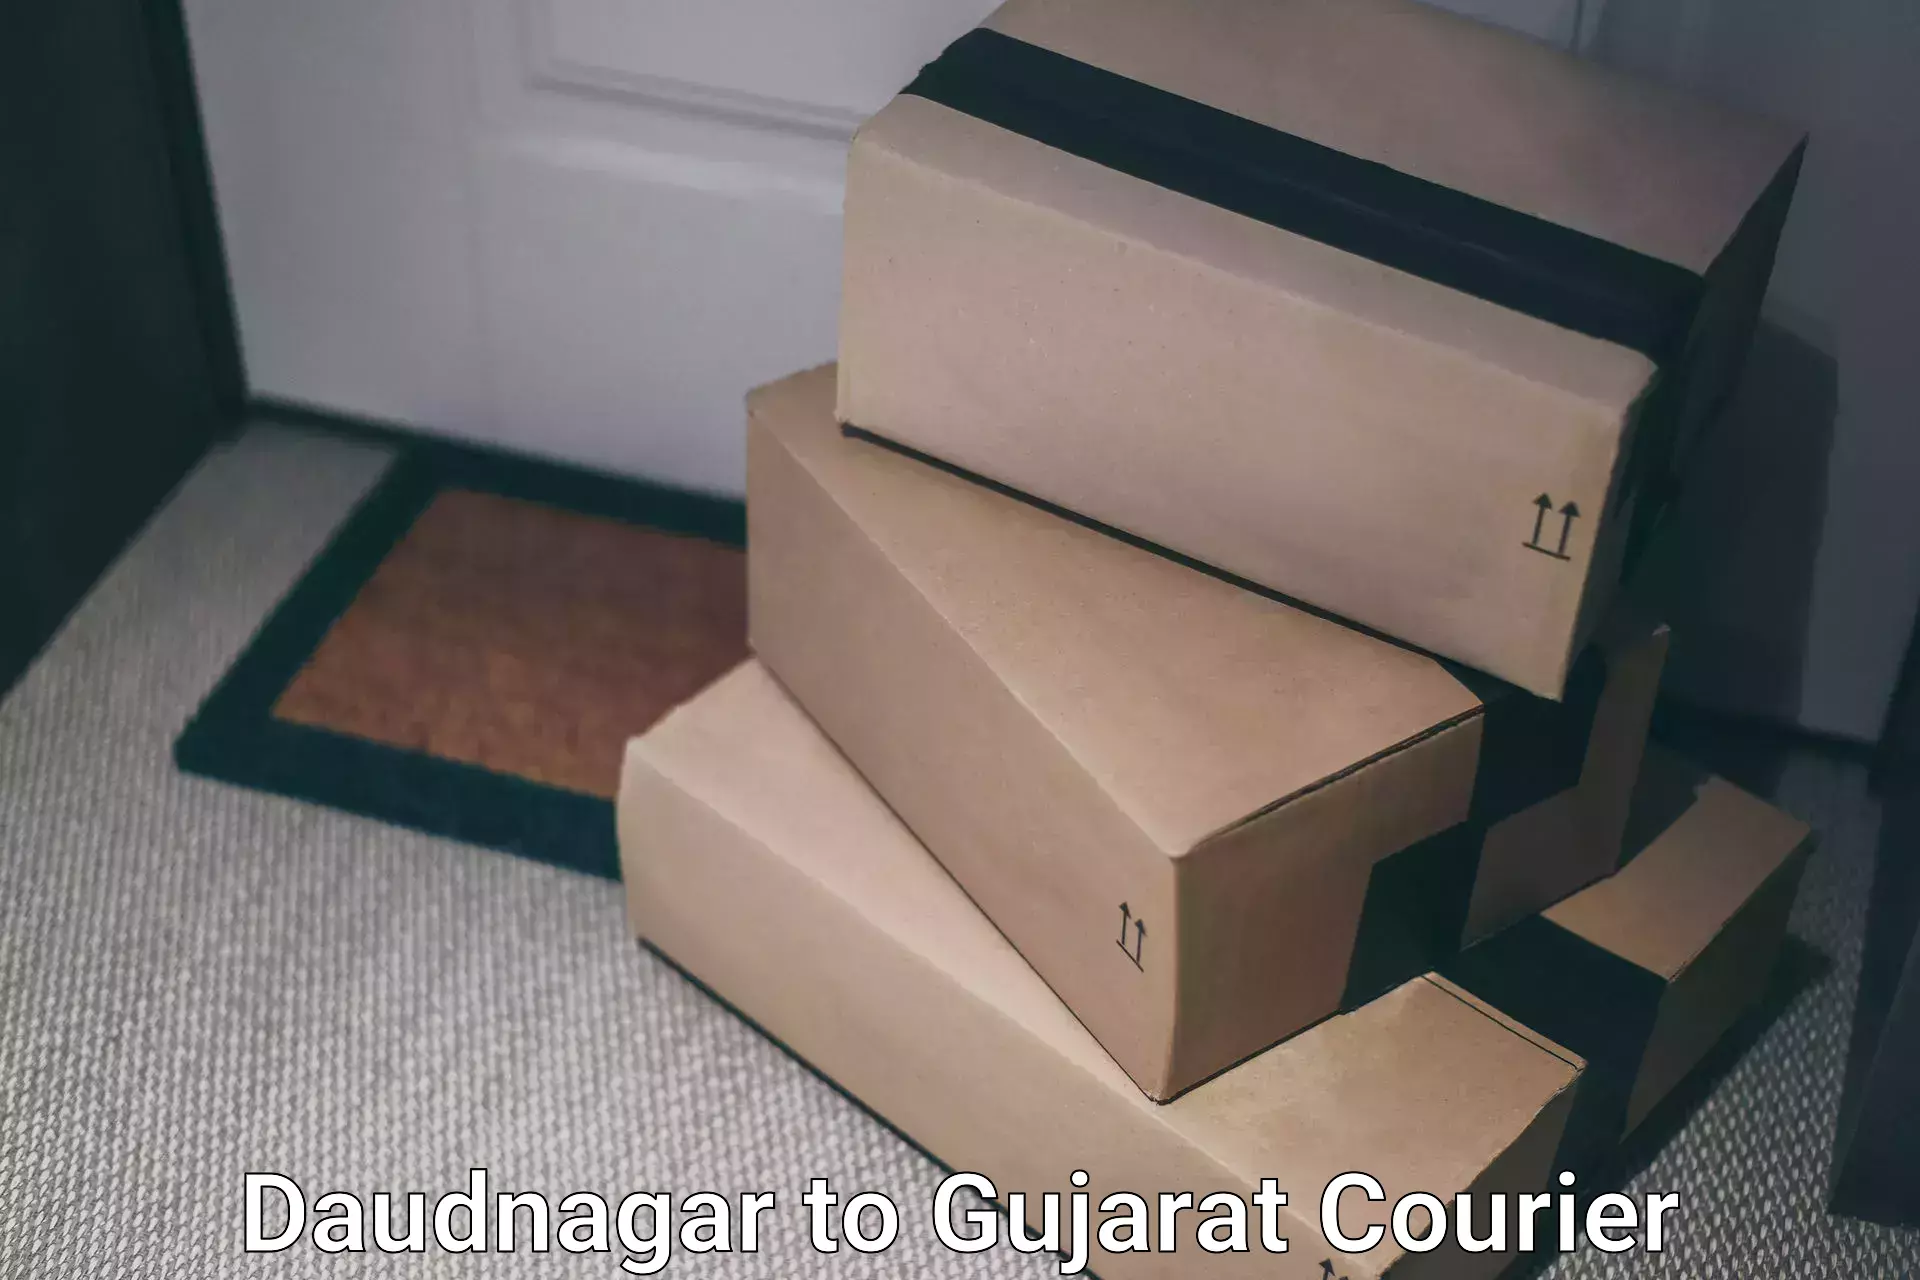 Global courier networks Daudnagar to Surat